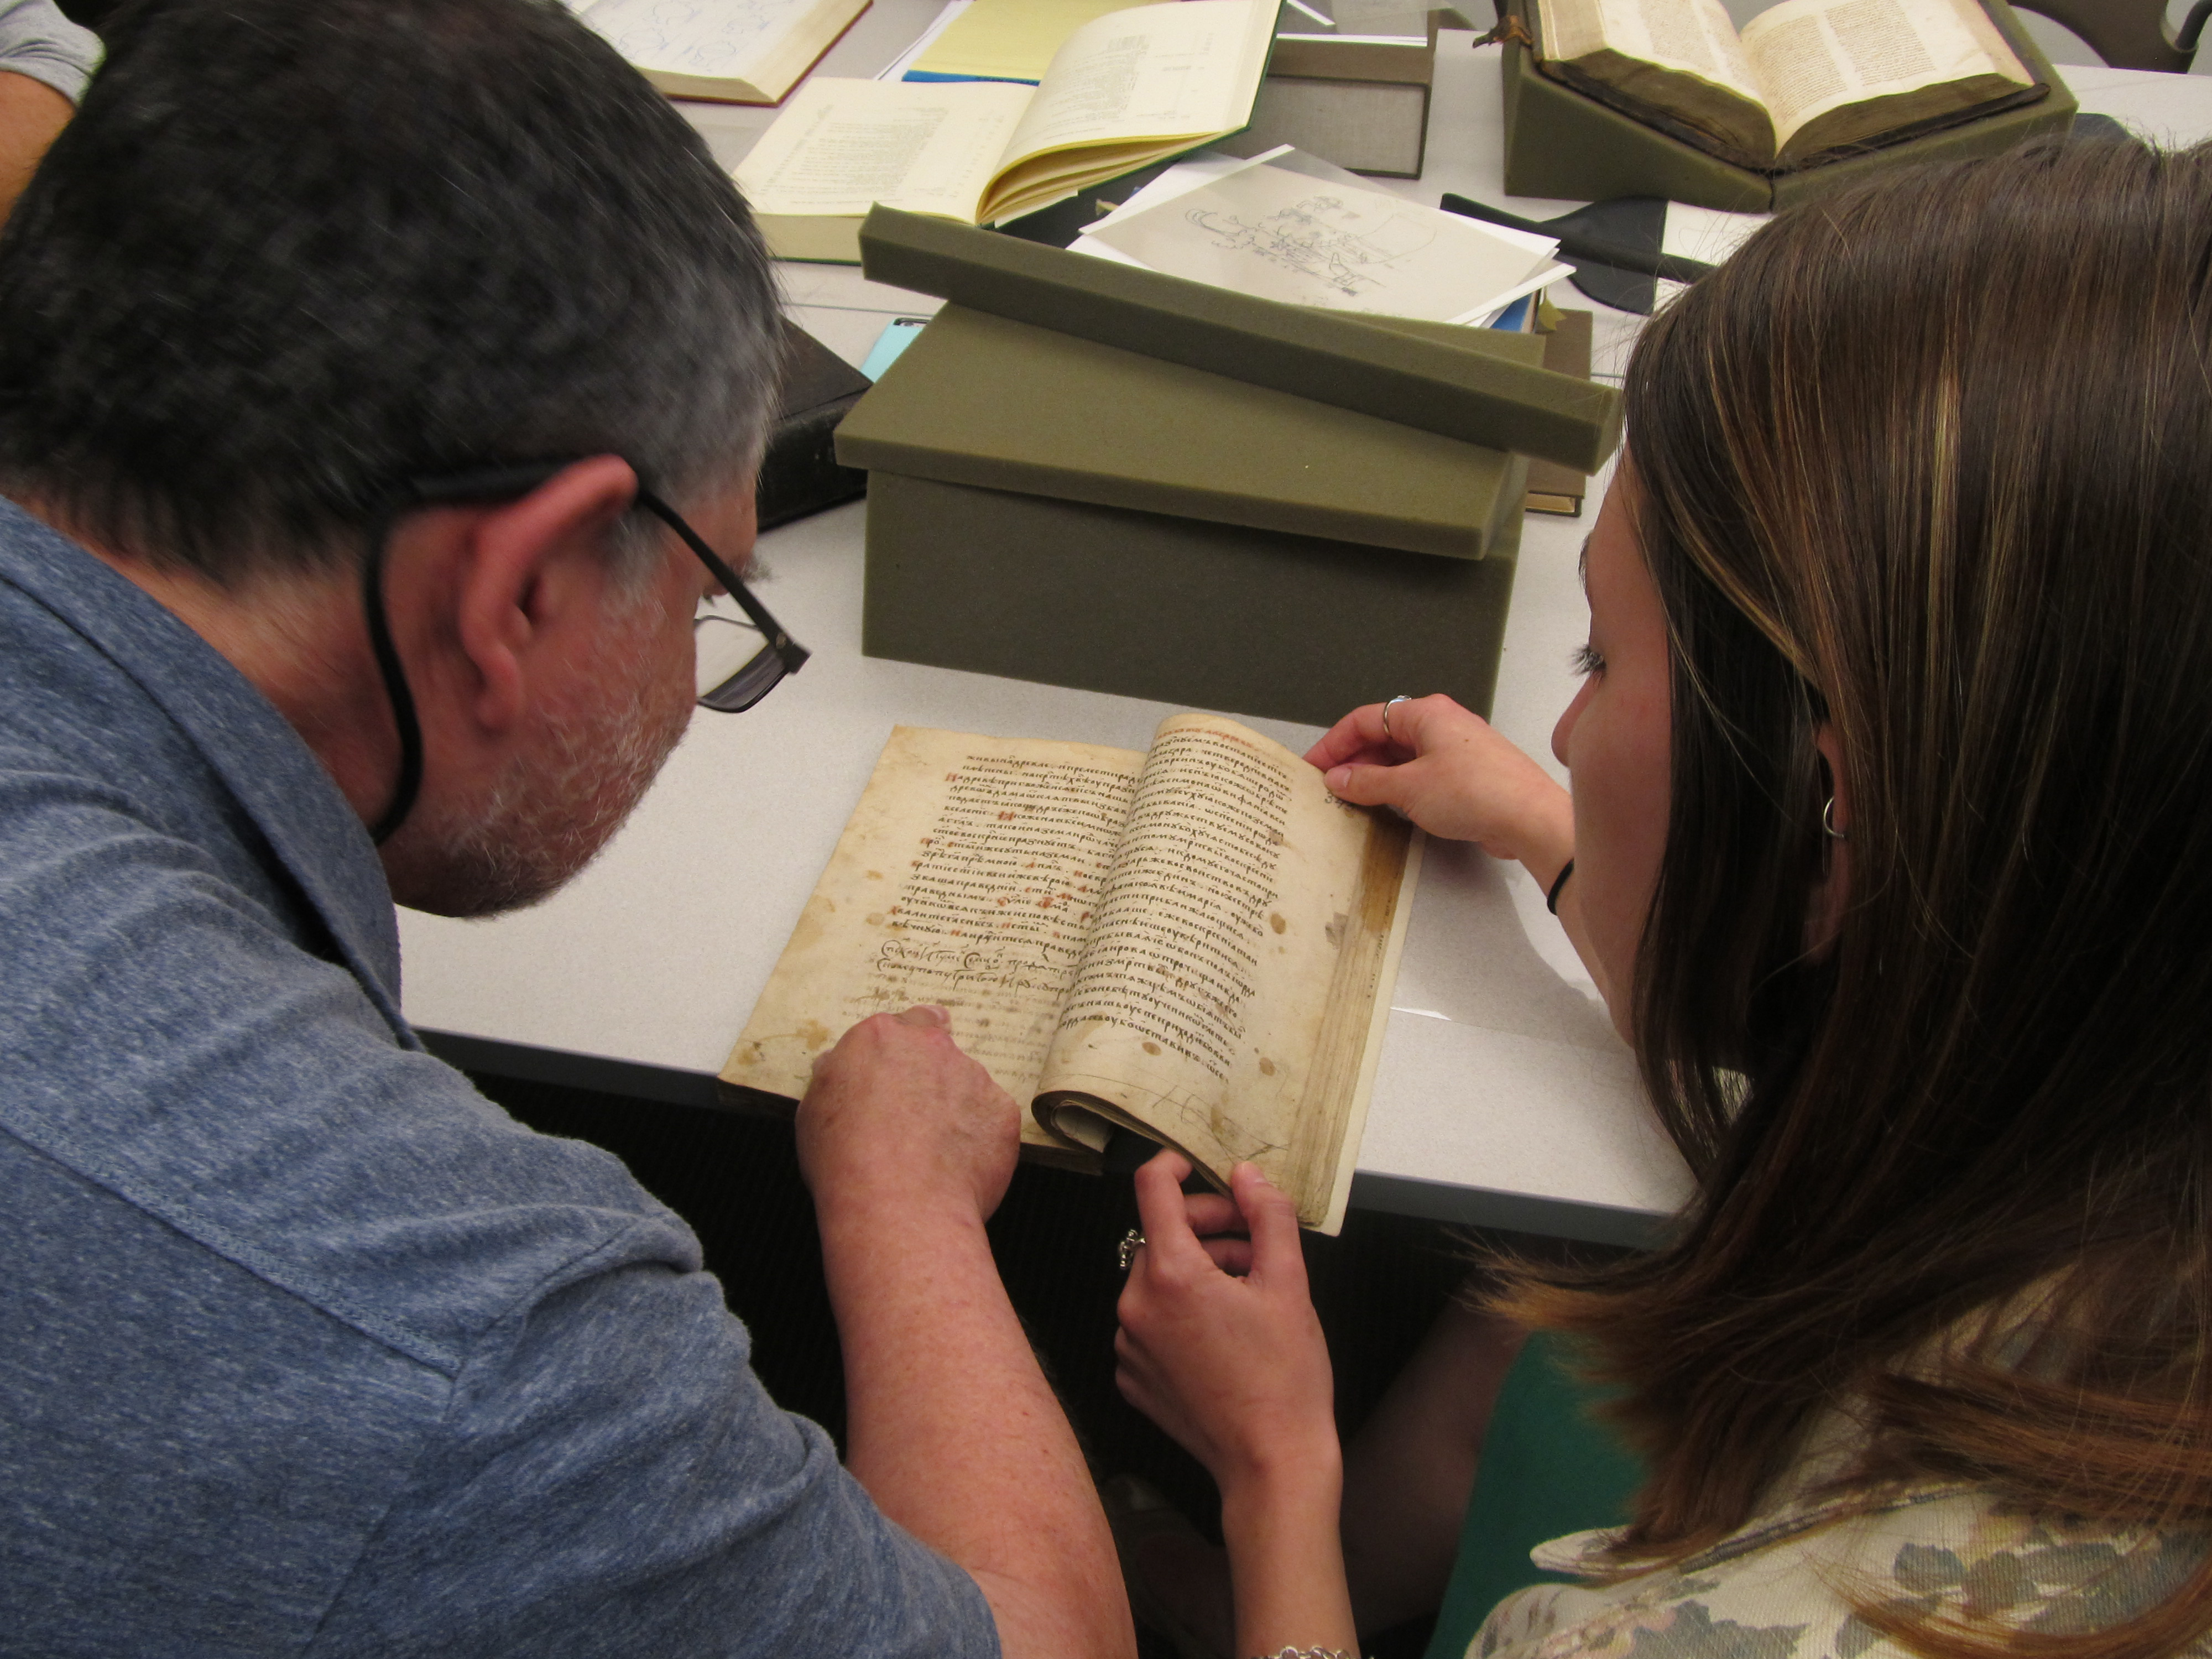 Predrag looks over manuscript with a participant